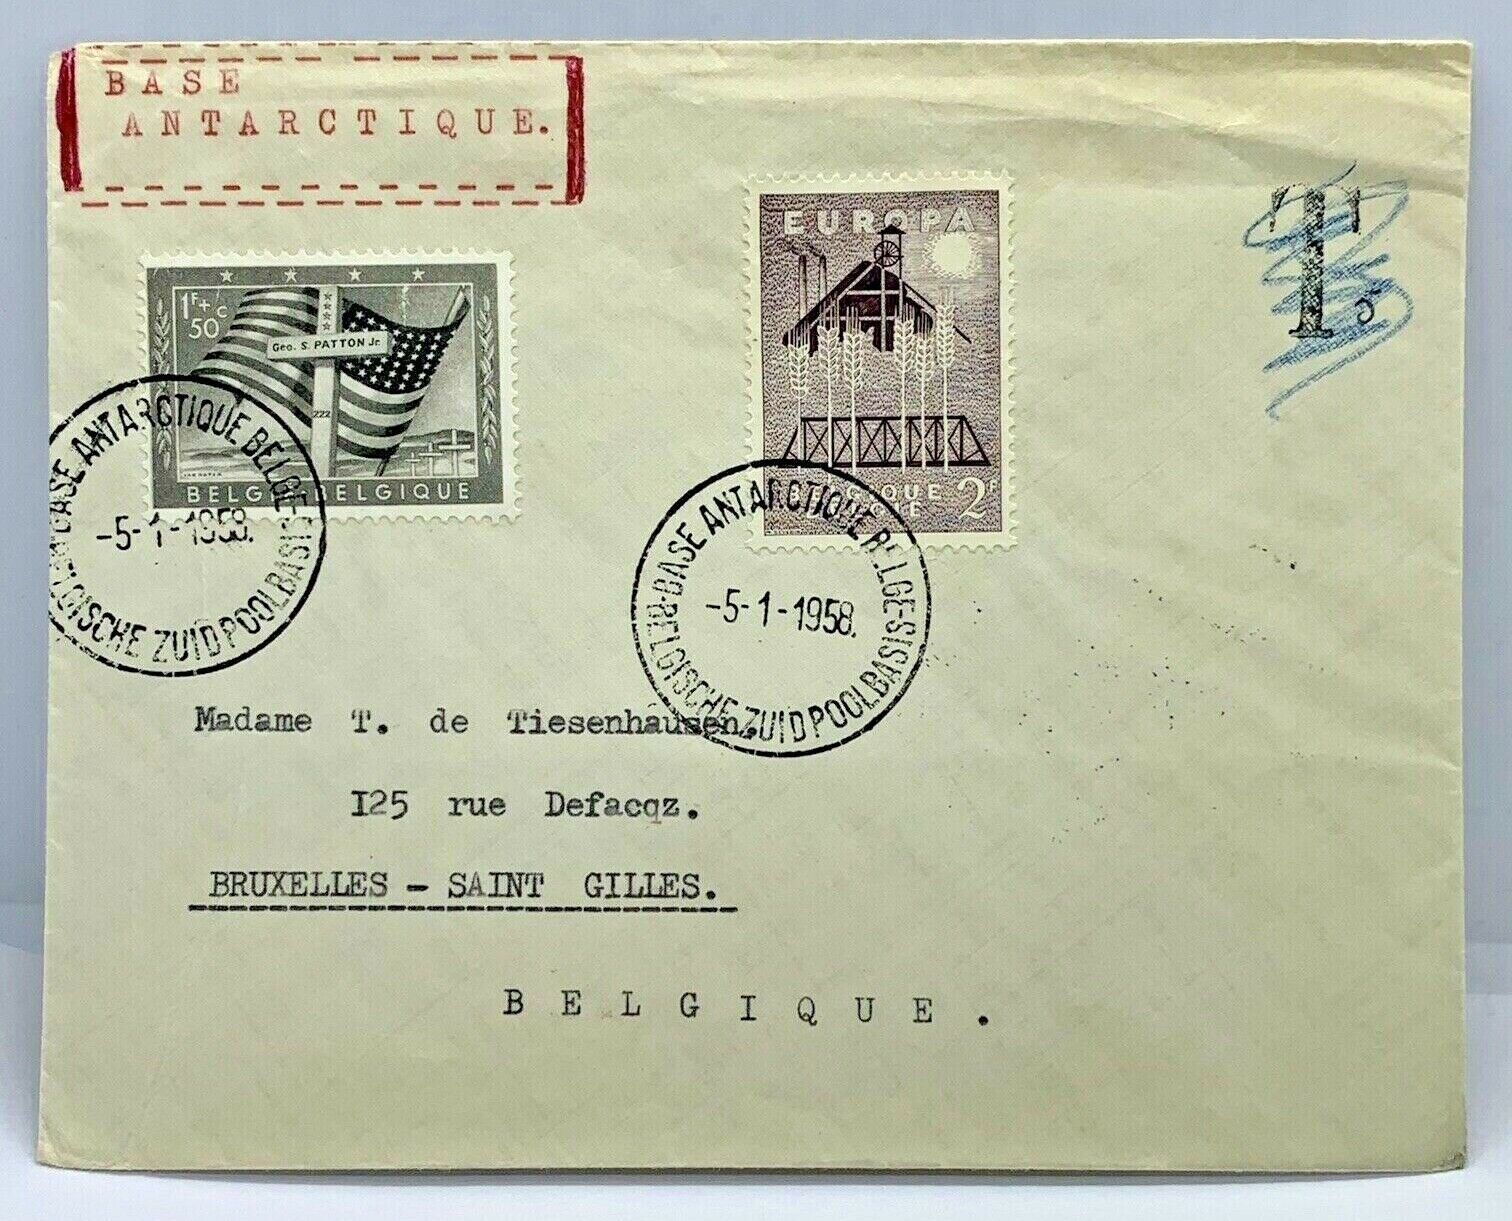 1958 Belgium Antarctica Base Cover Sent To Brussels Saint Gilles